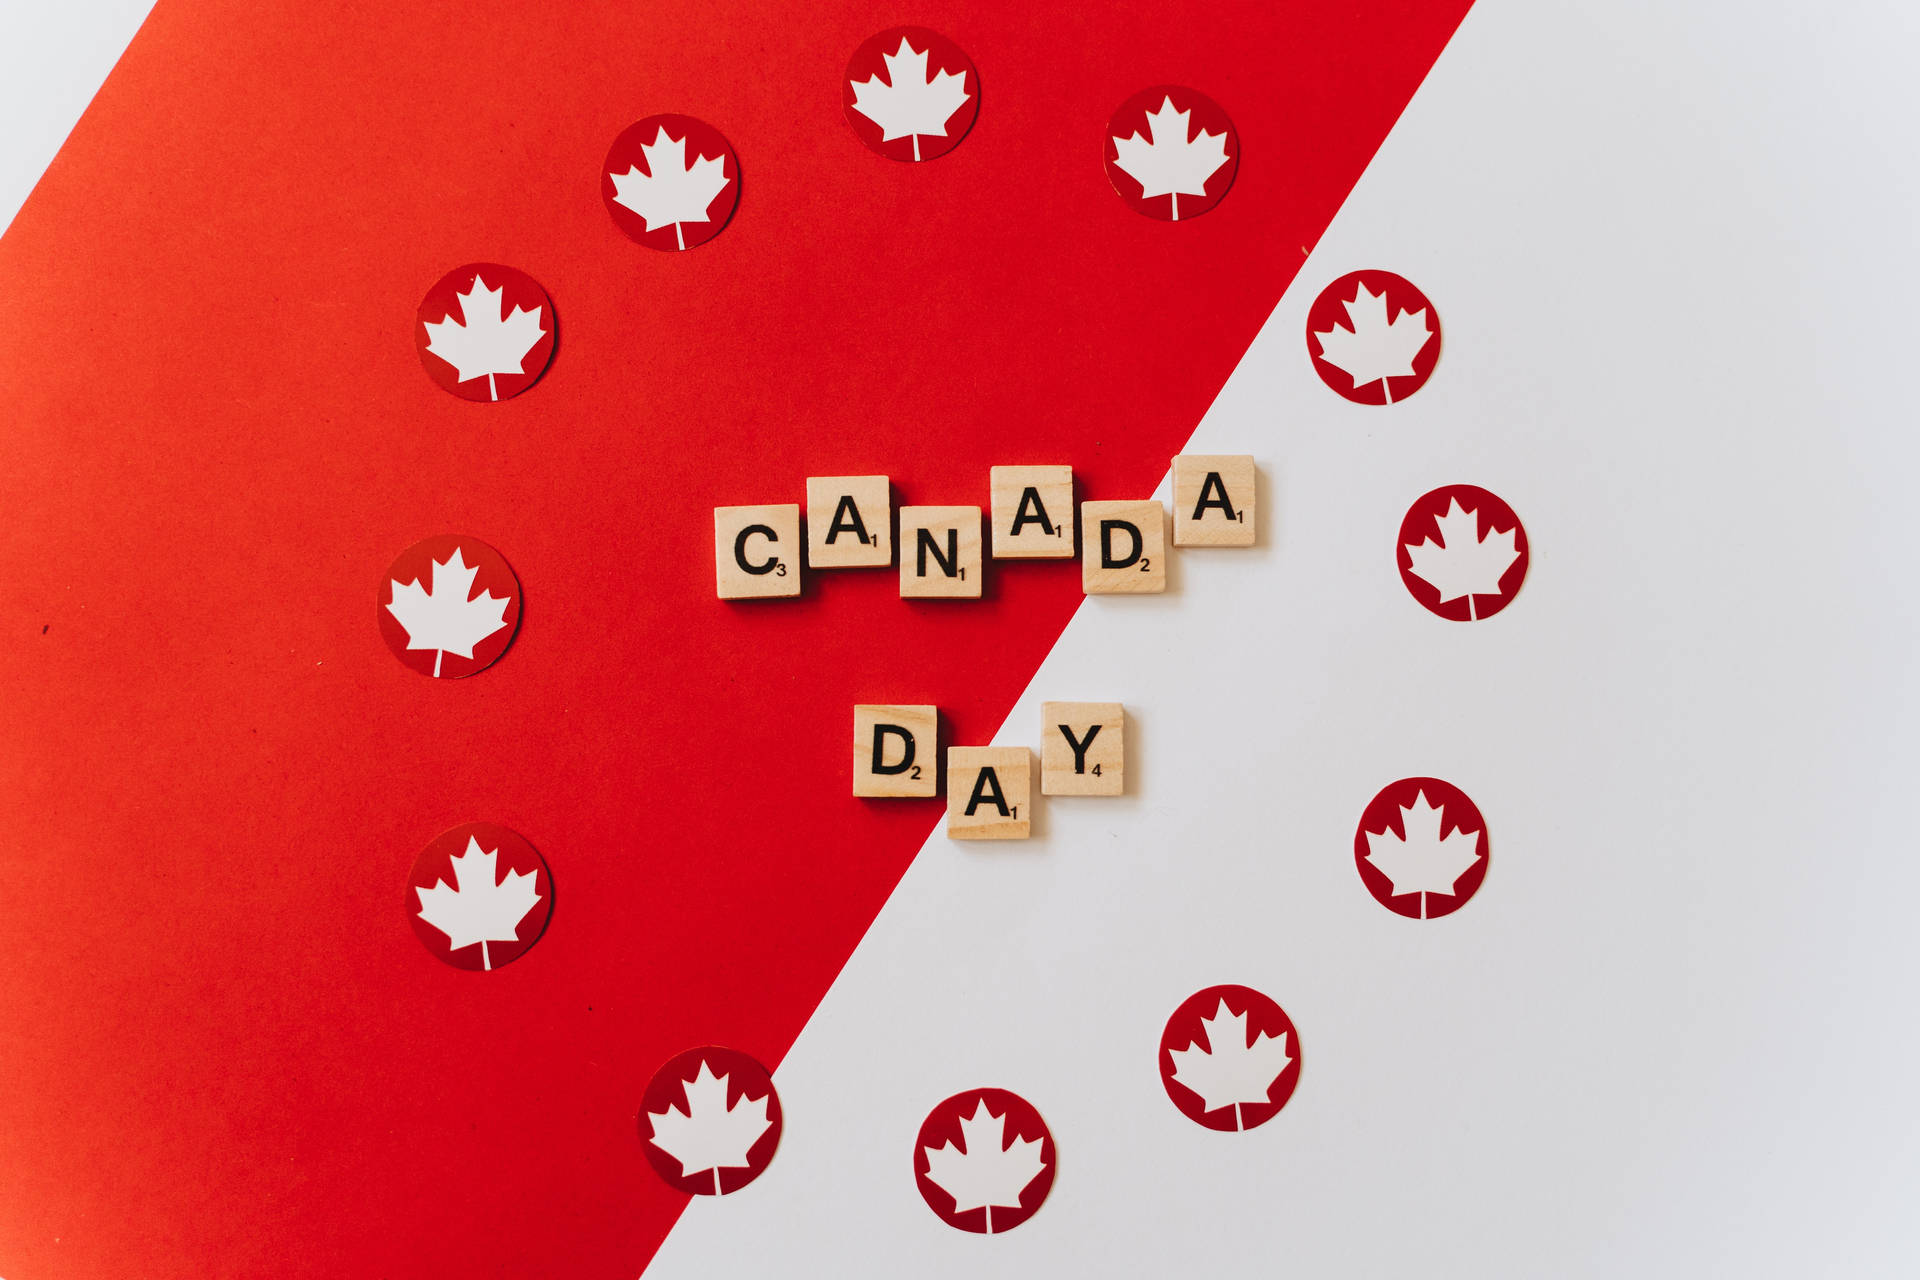 Kanadischthematisierter Kanada-tag Wallpaper